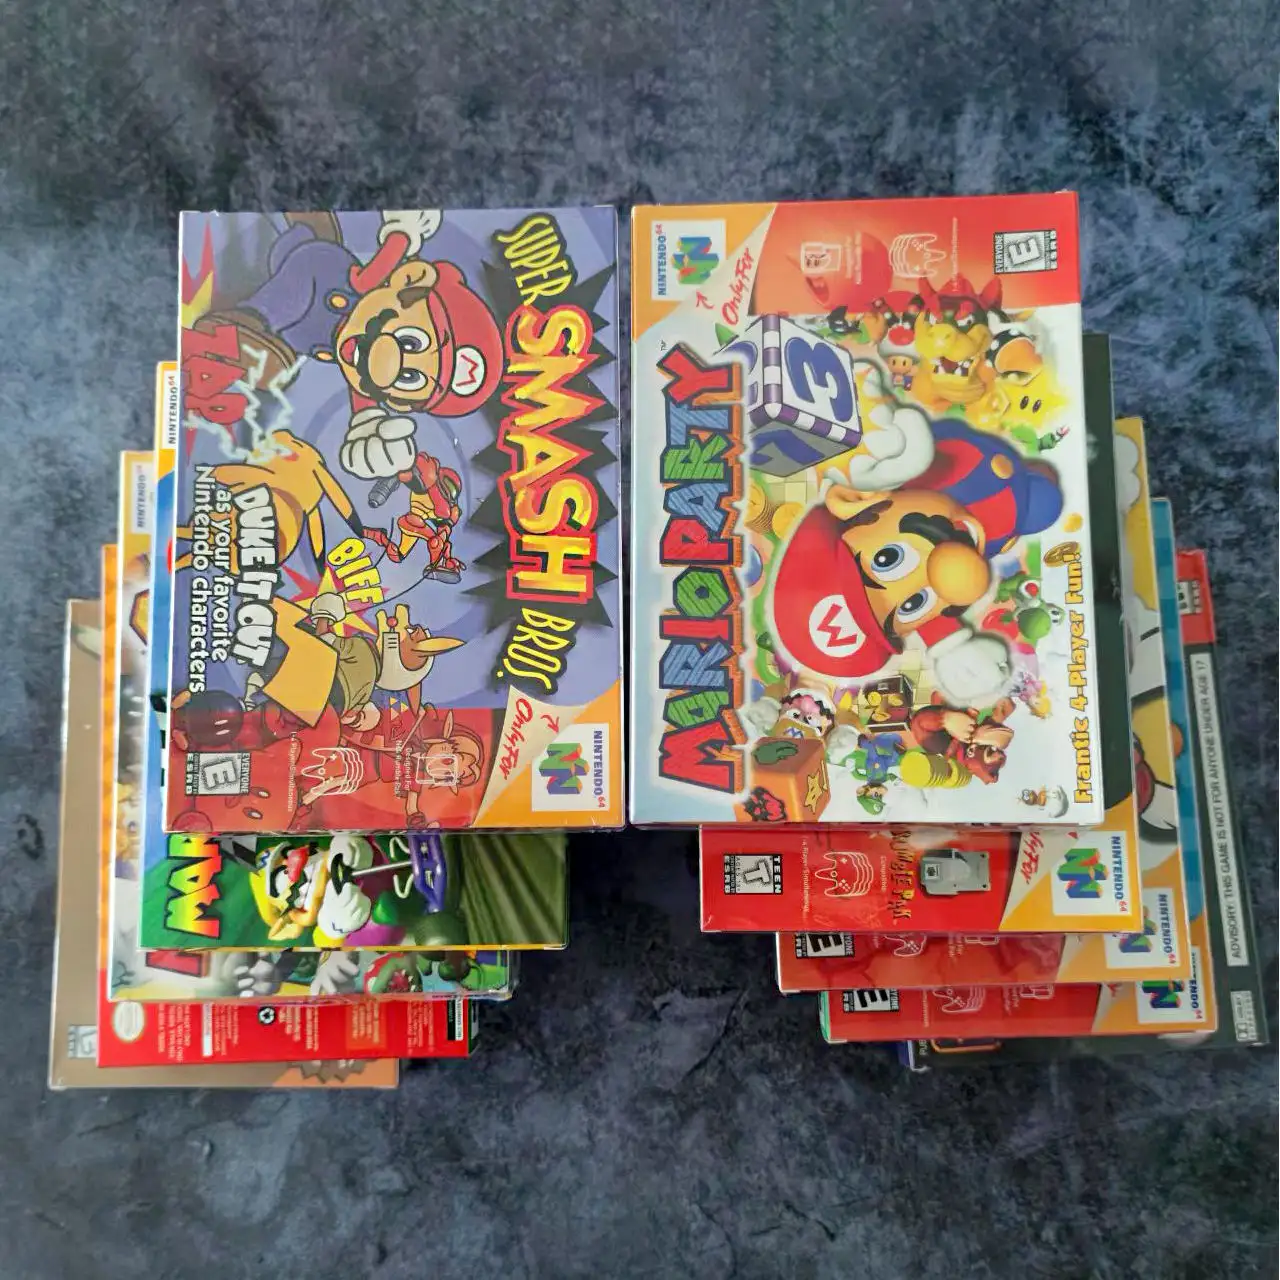 English language 16 Bit Classic Video Game Cartridge N64 Game in Box For Nintendo 64